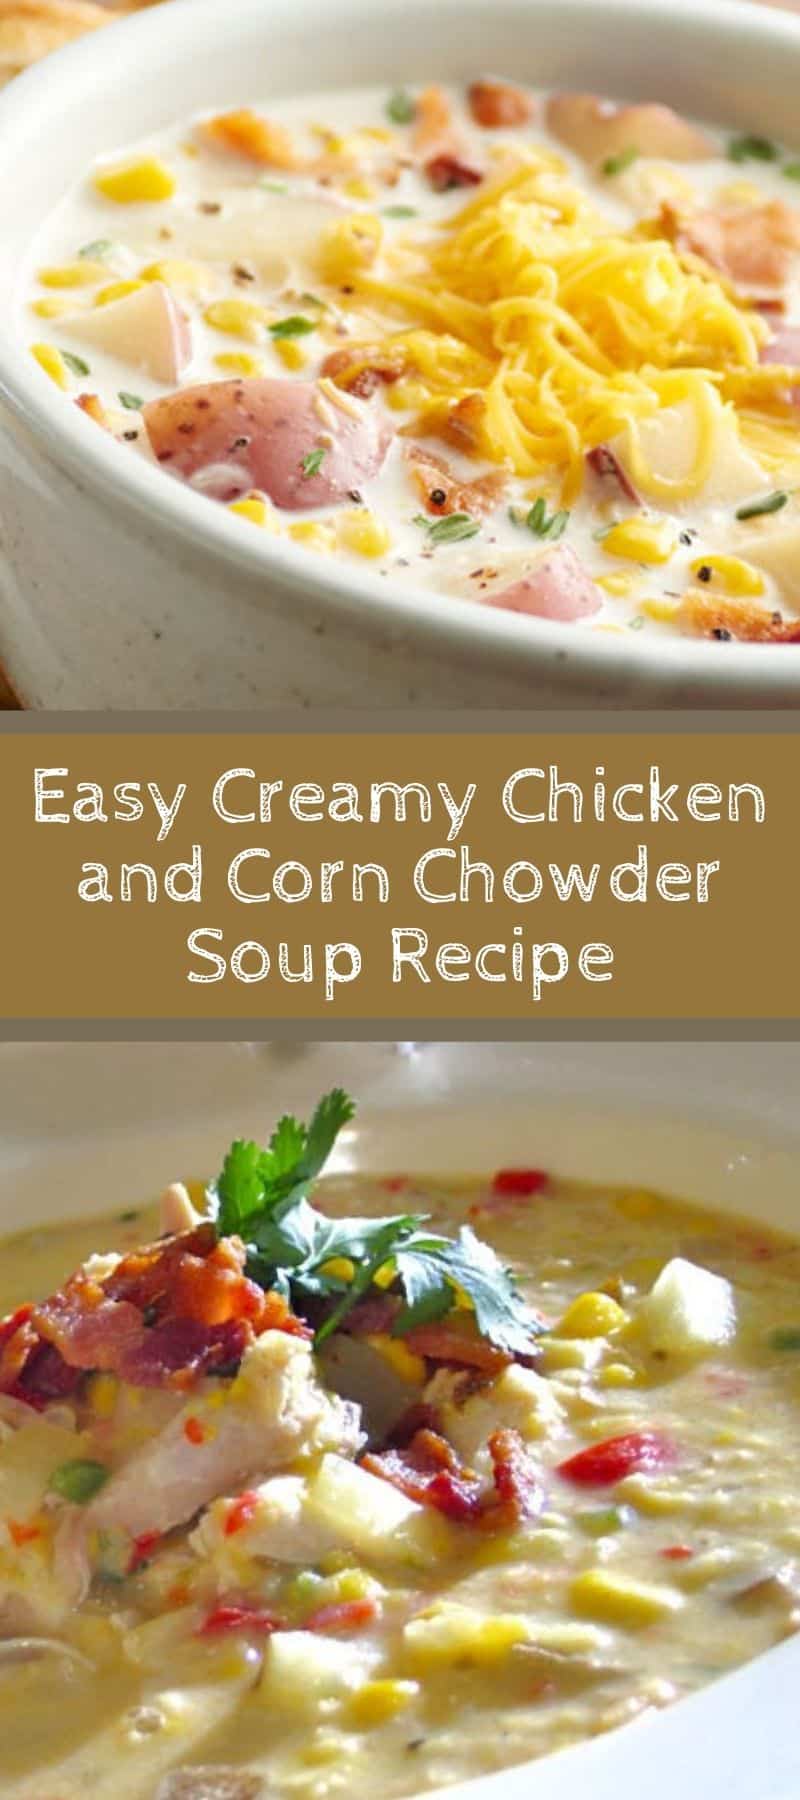 Easy Creamy Chicken and Corn Chowder Soup Recipe